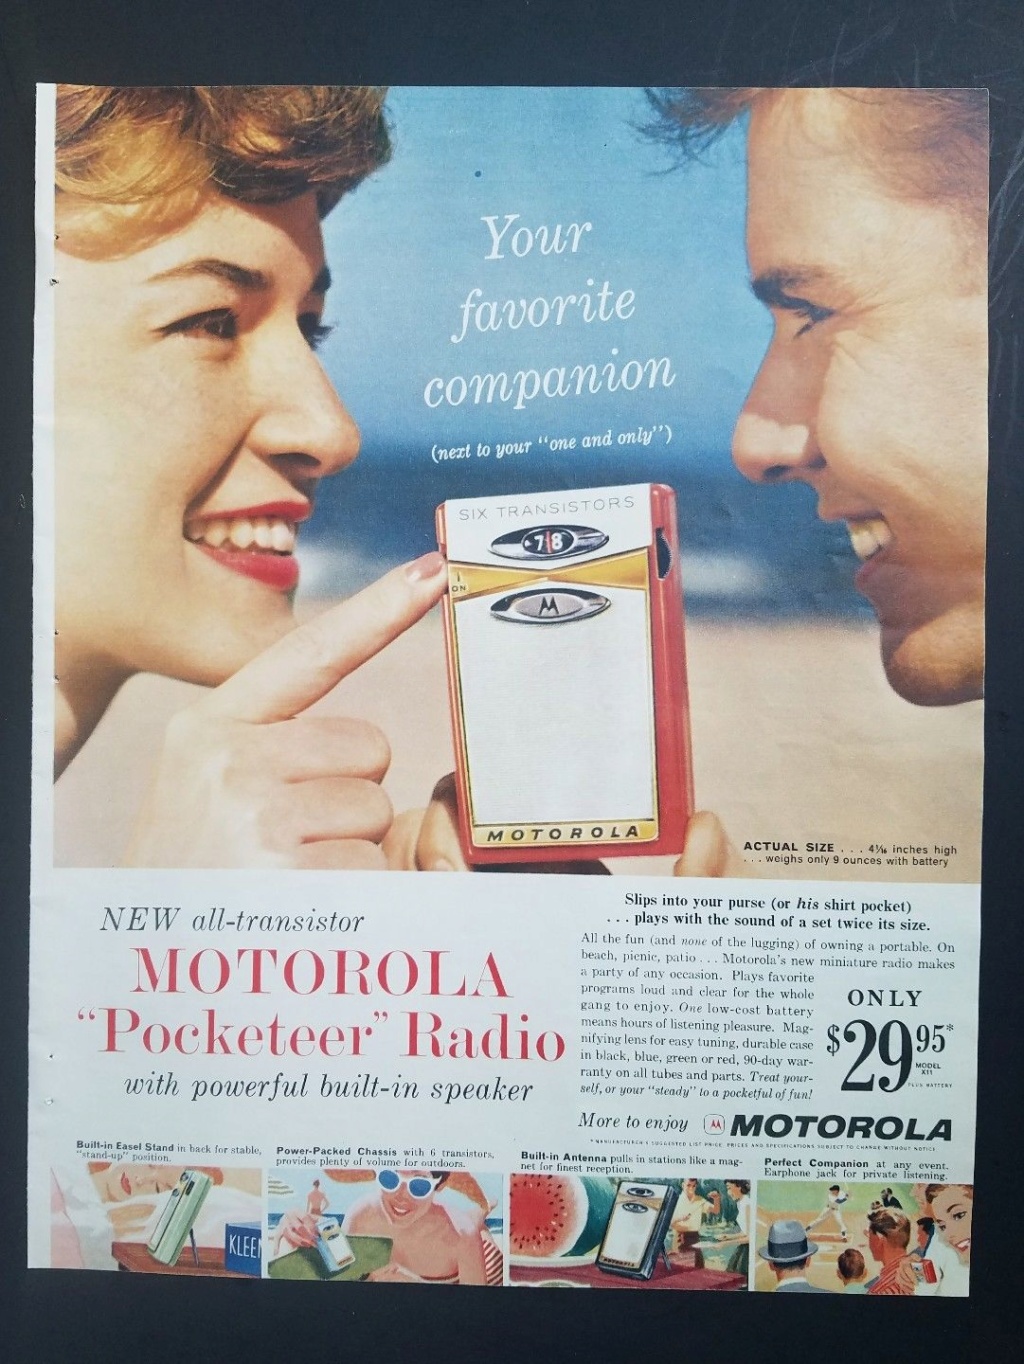 Motorola Radio & Television vintage ads - publicités années 50 Motorola Motoro18